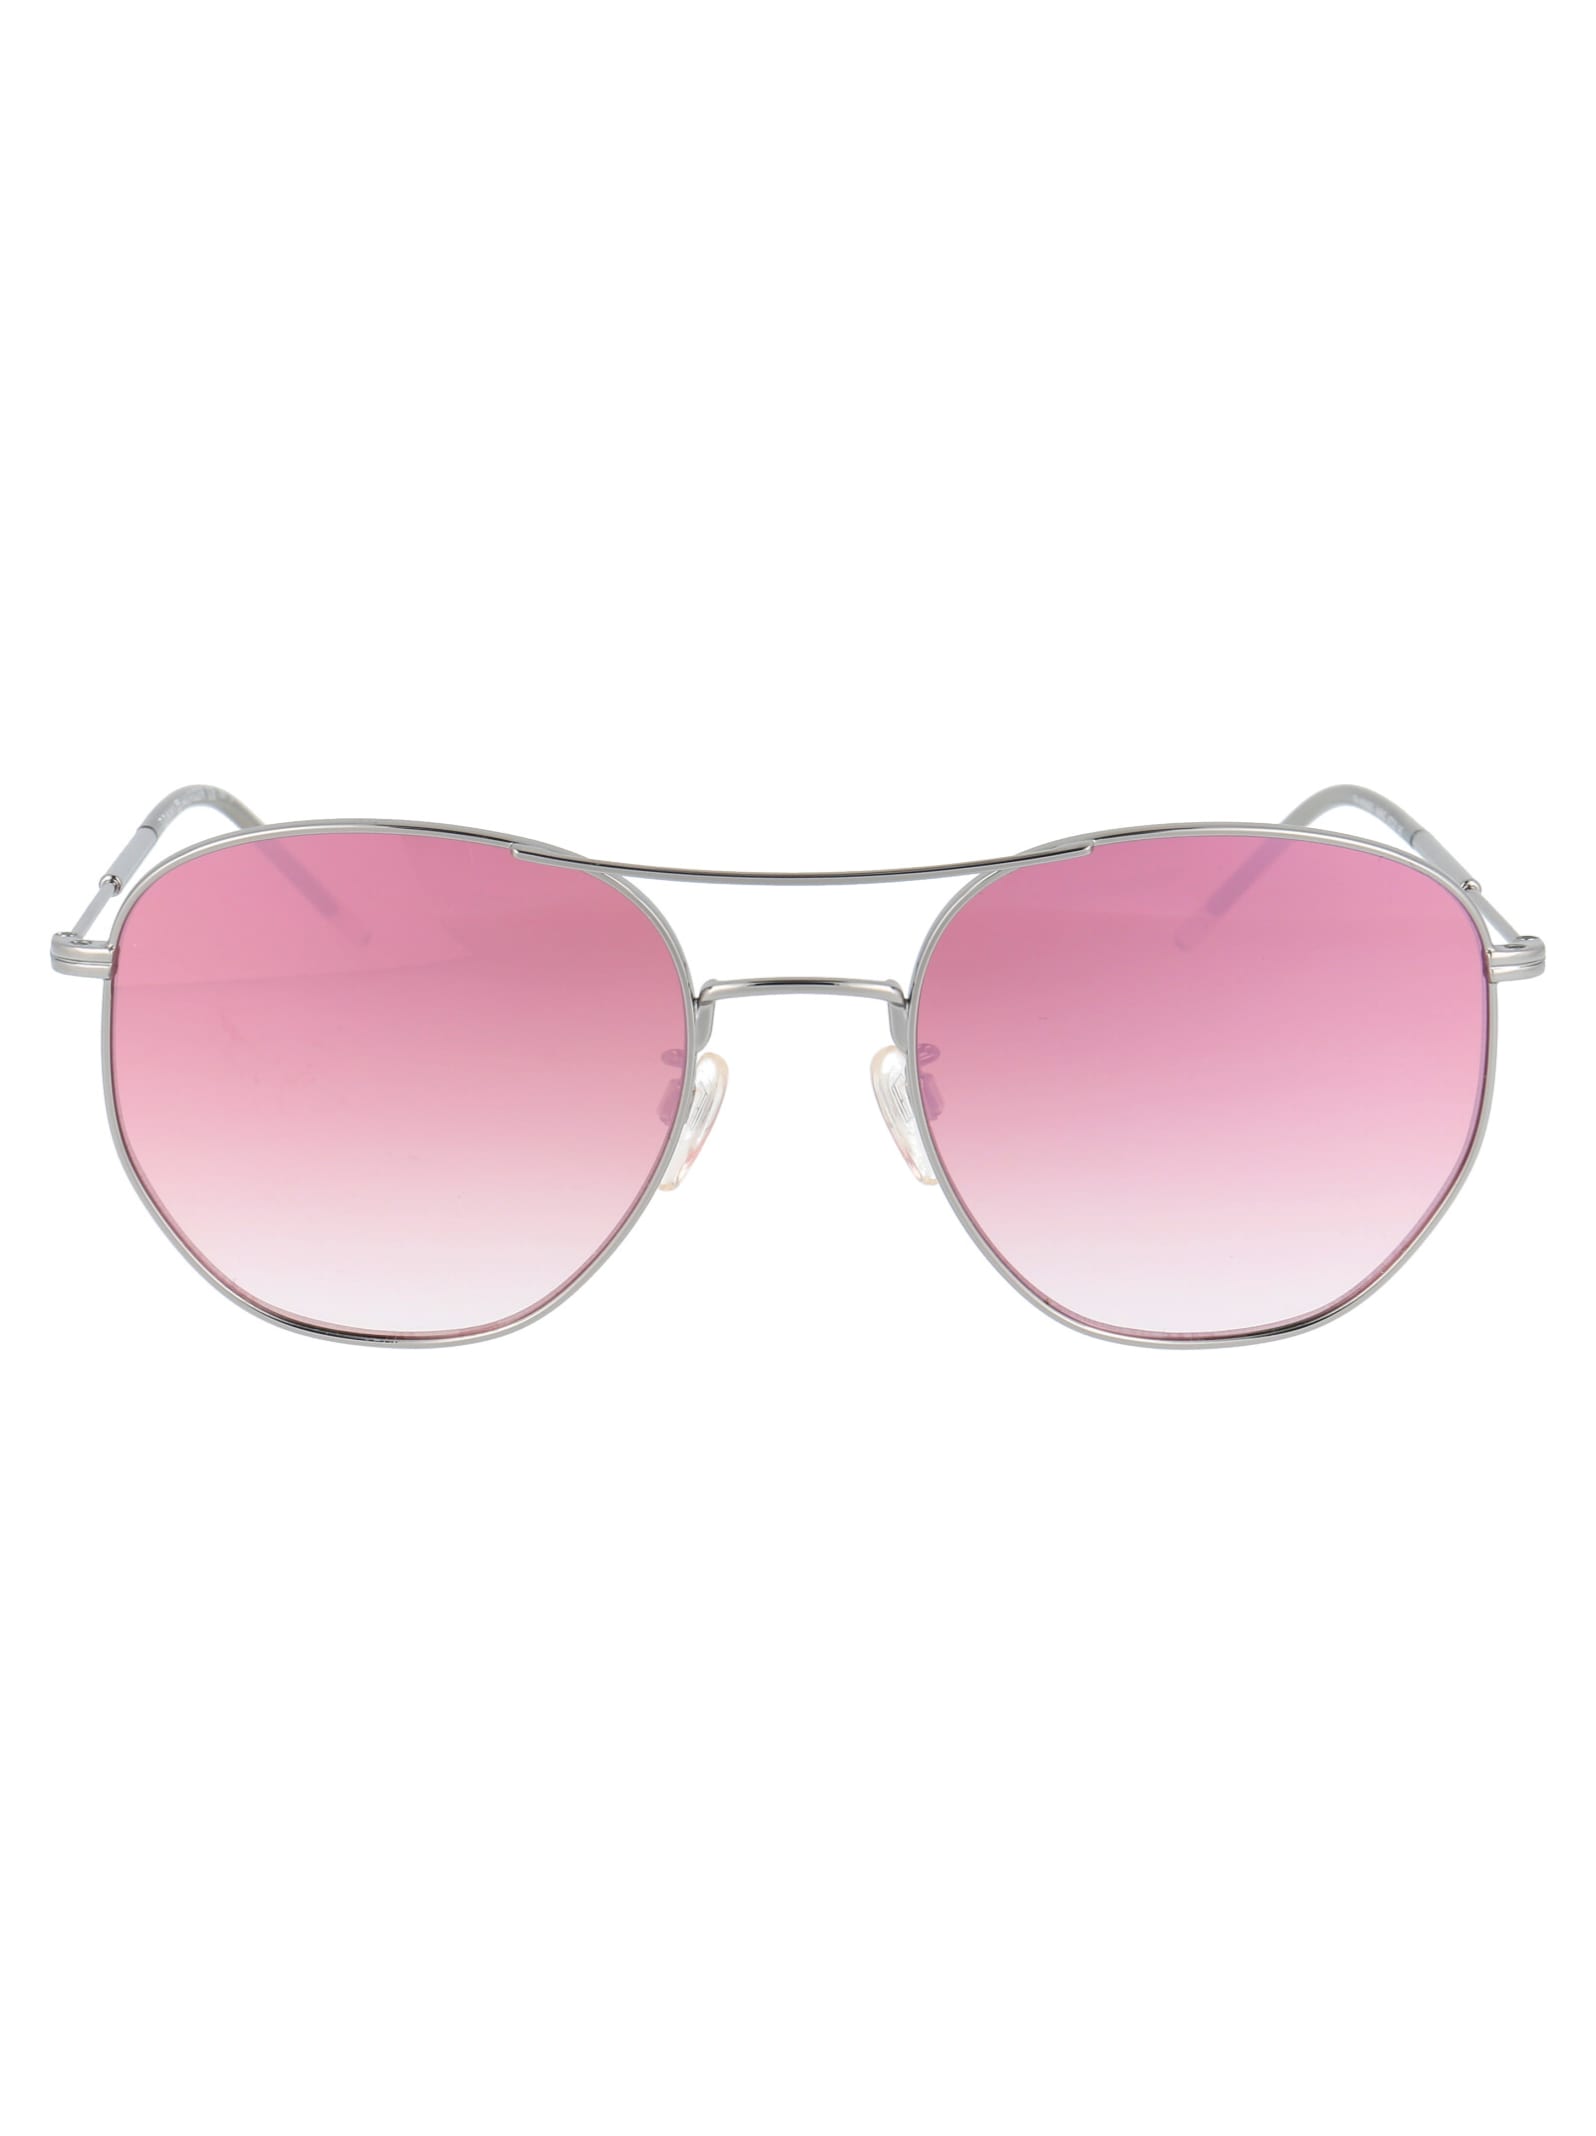 Tommy Hilfiger Th 1619/g/s Sunglasses